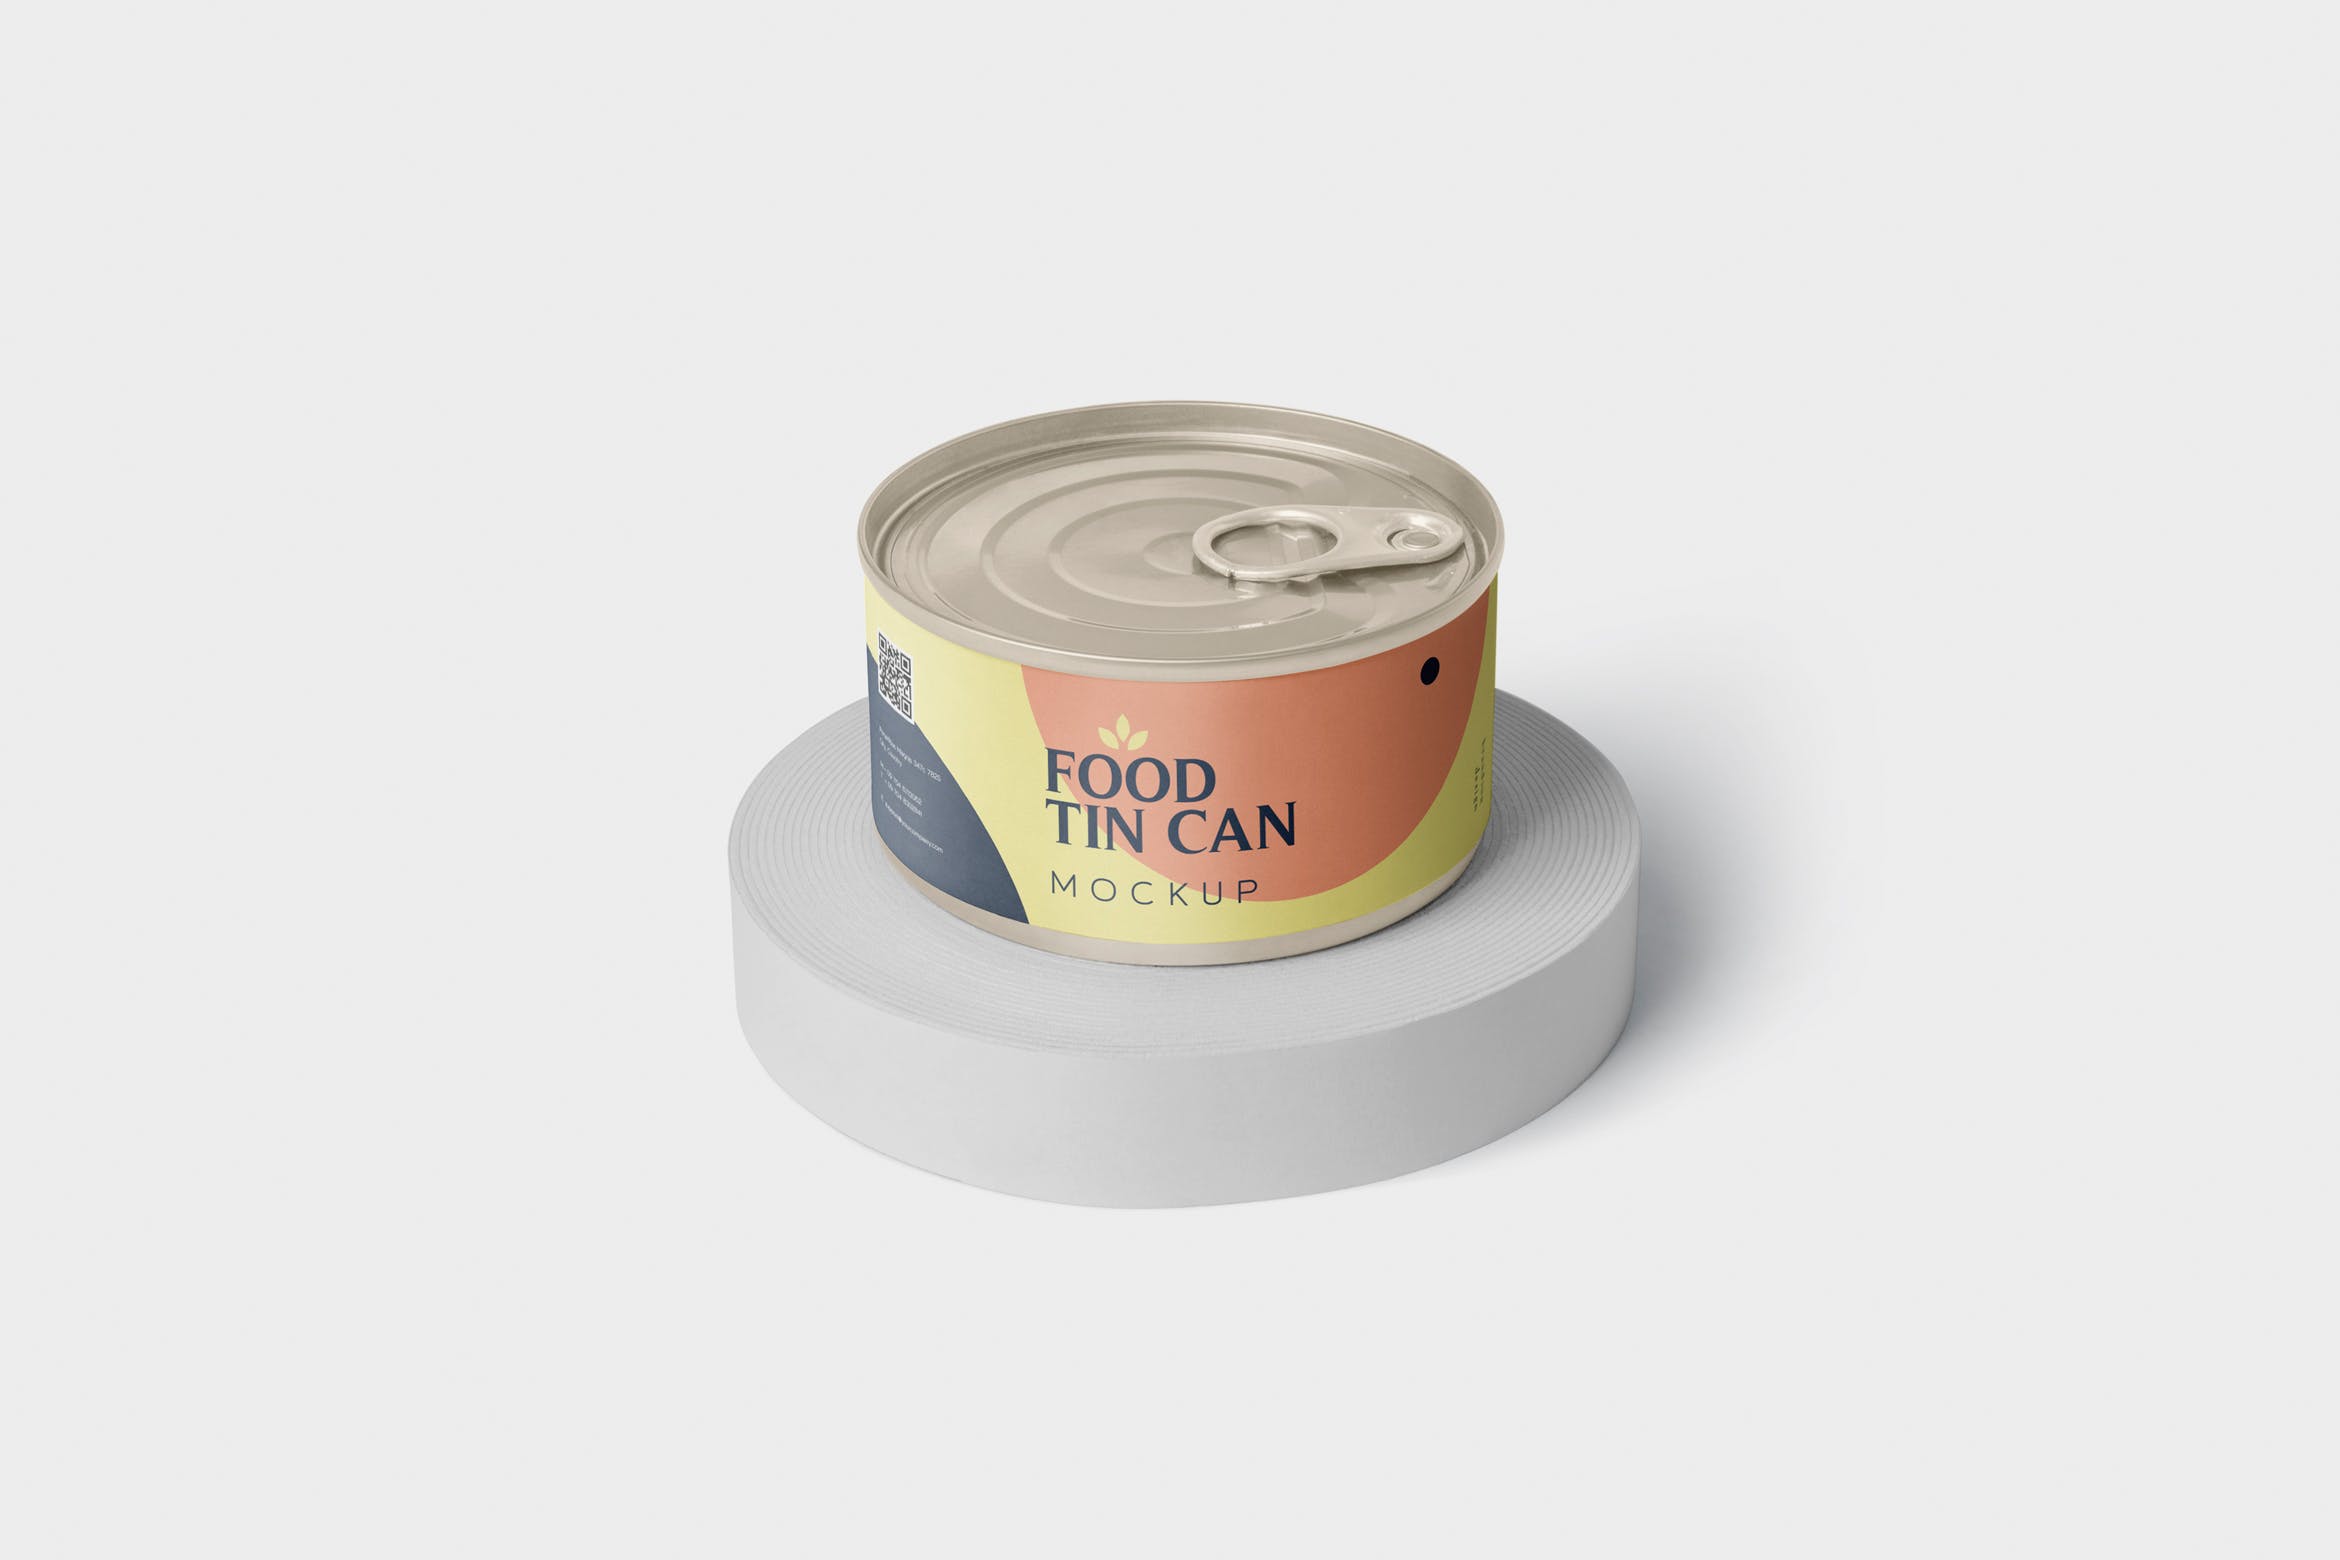 迷你型食品罐头外观设计图样机模板 Food Tin Can Mockup Small Size – Round插图